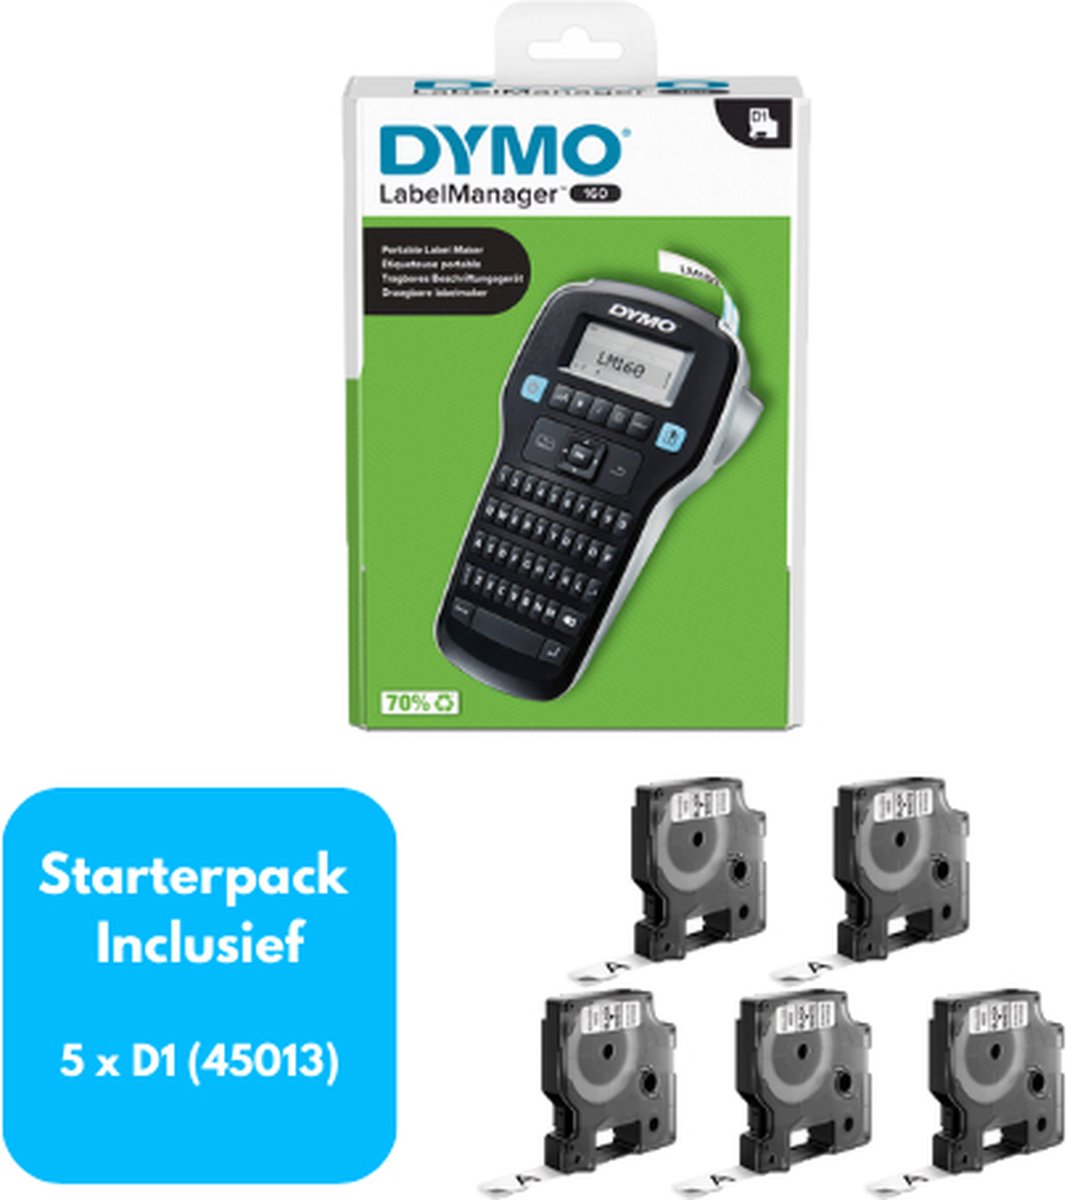 Dymo LM160 - Labelmanager - Labelprinter - Starterpack - Inclusief 5x D1 zwart/wit Lettertape (Huismerk)